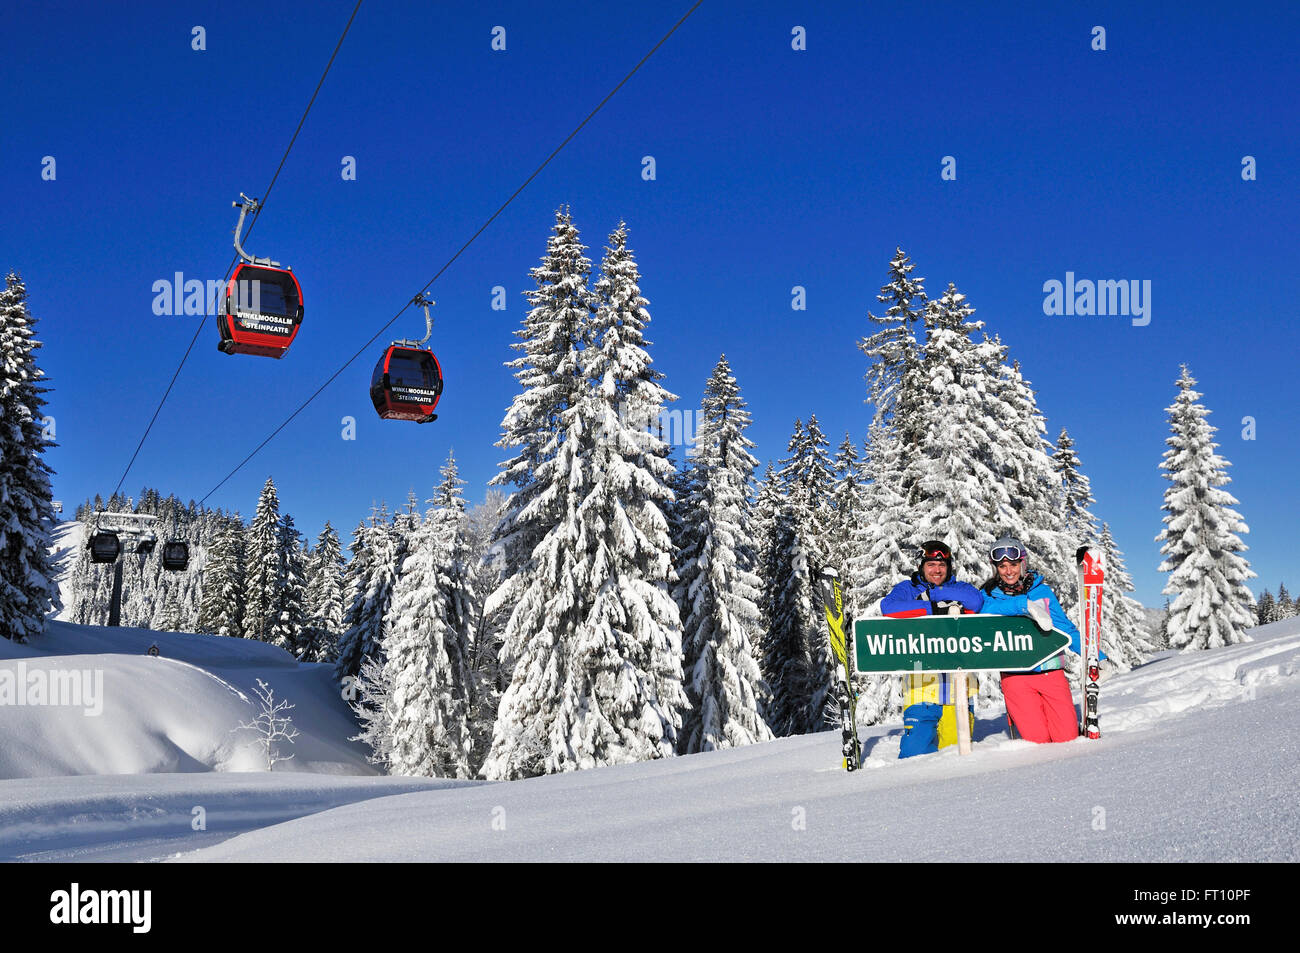 Gli sciatori in posa dietro un cartello indicatore, Winklmoosalm ski area, Reit im Winkl, Chiemgau, Baviera, Germania Foto Stock